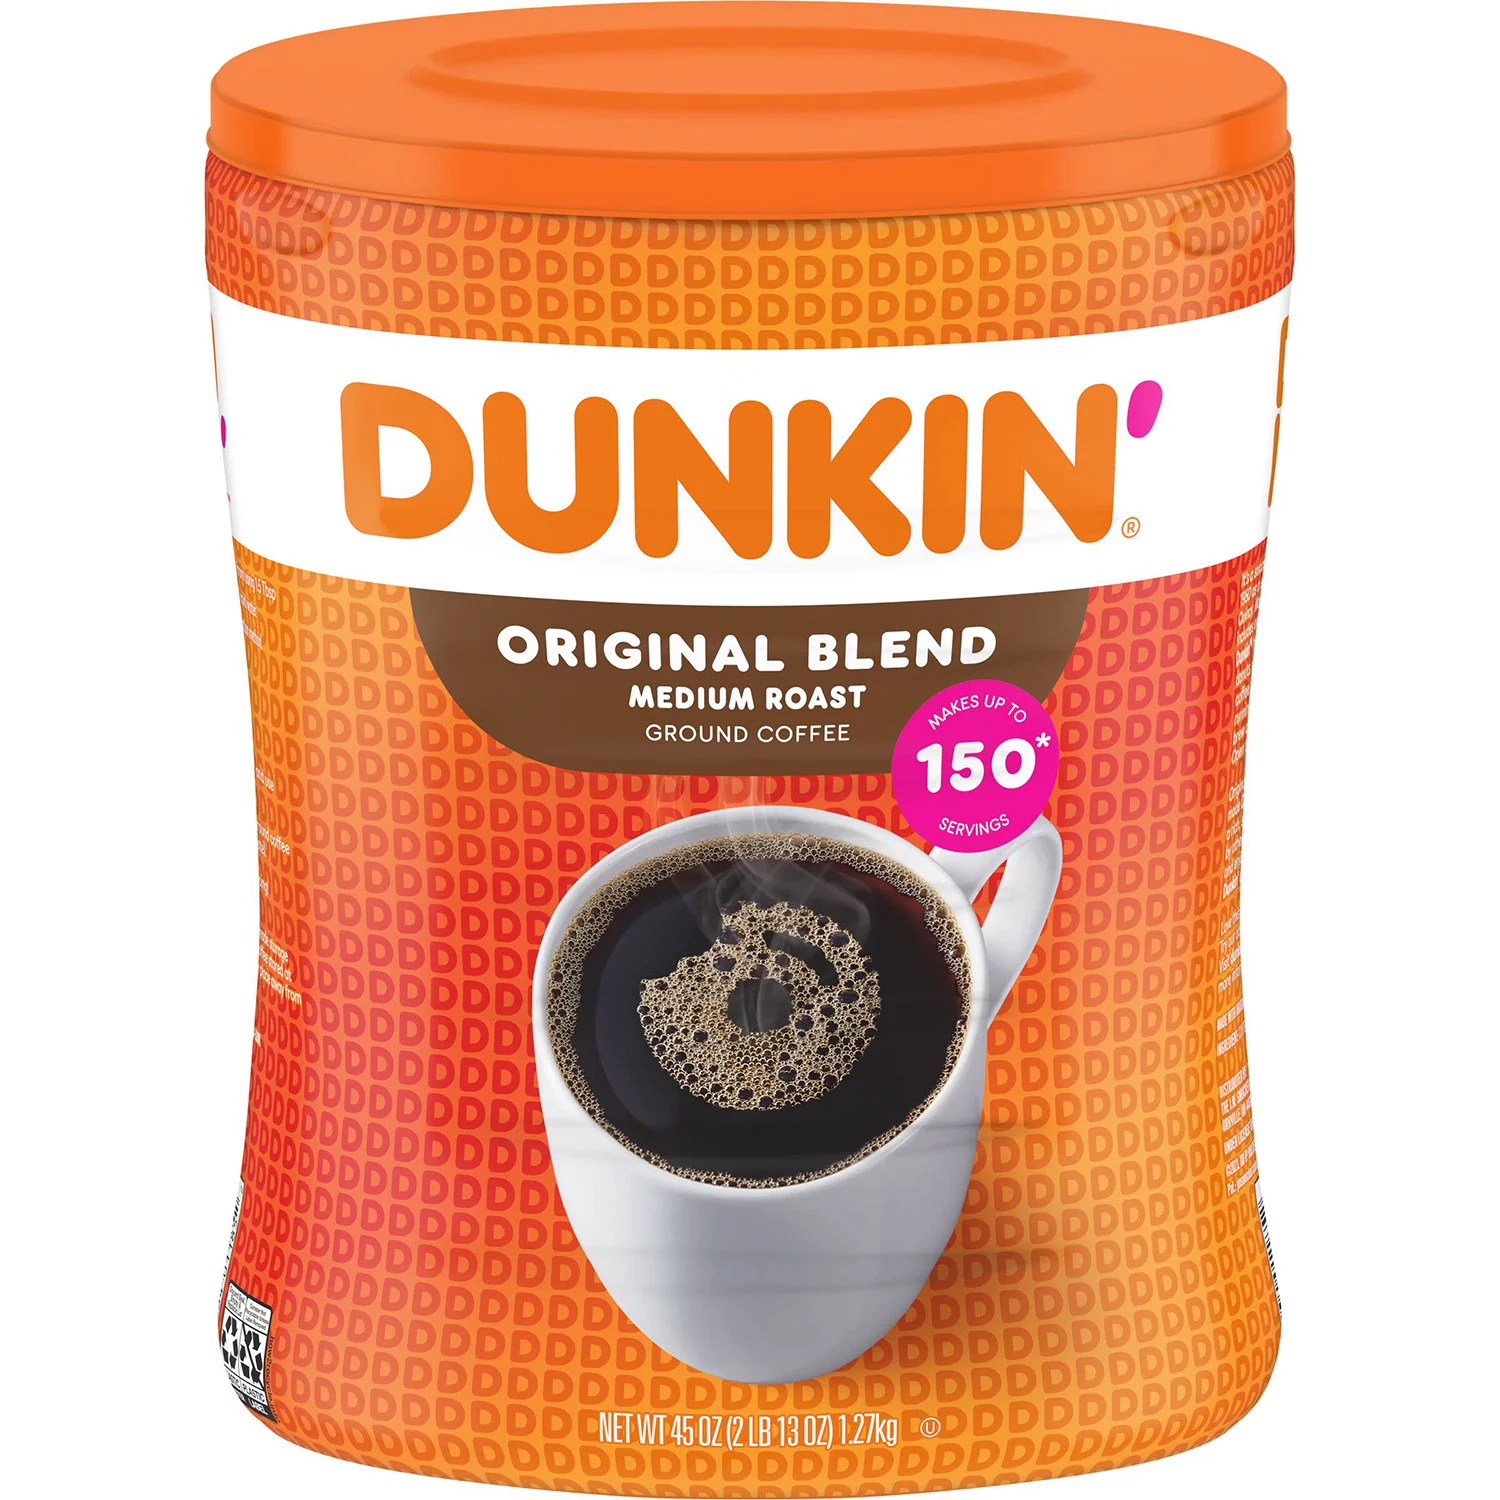 Dunkin’ Donuts Original Blend Ground Coffee, Medium Roast (45 oz.)